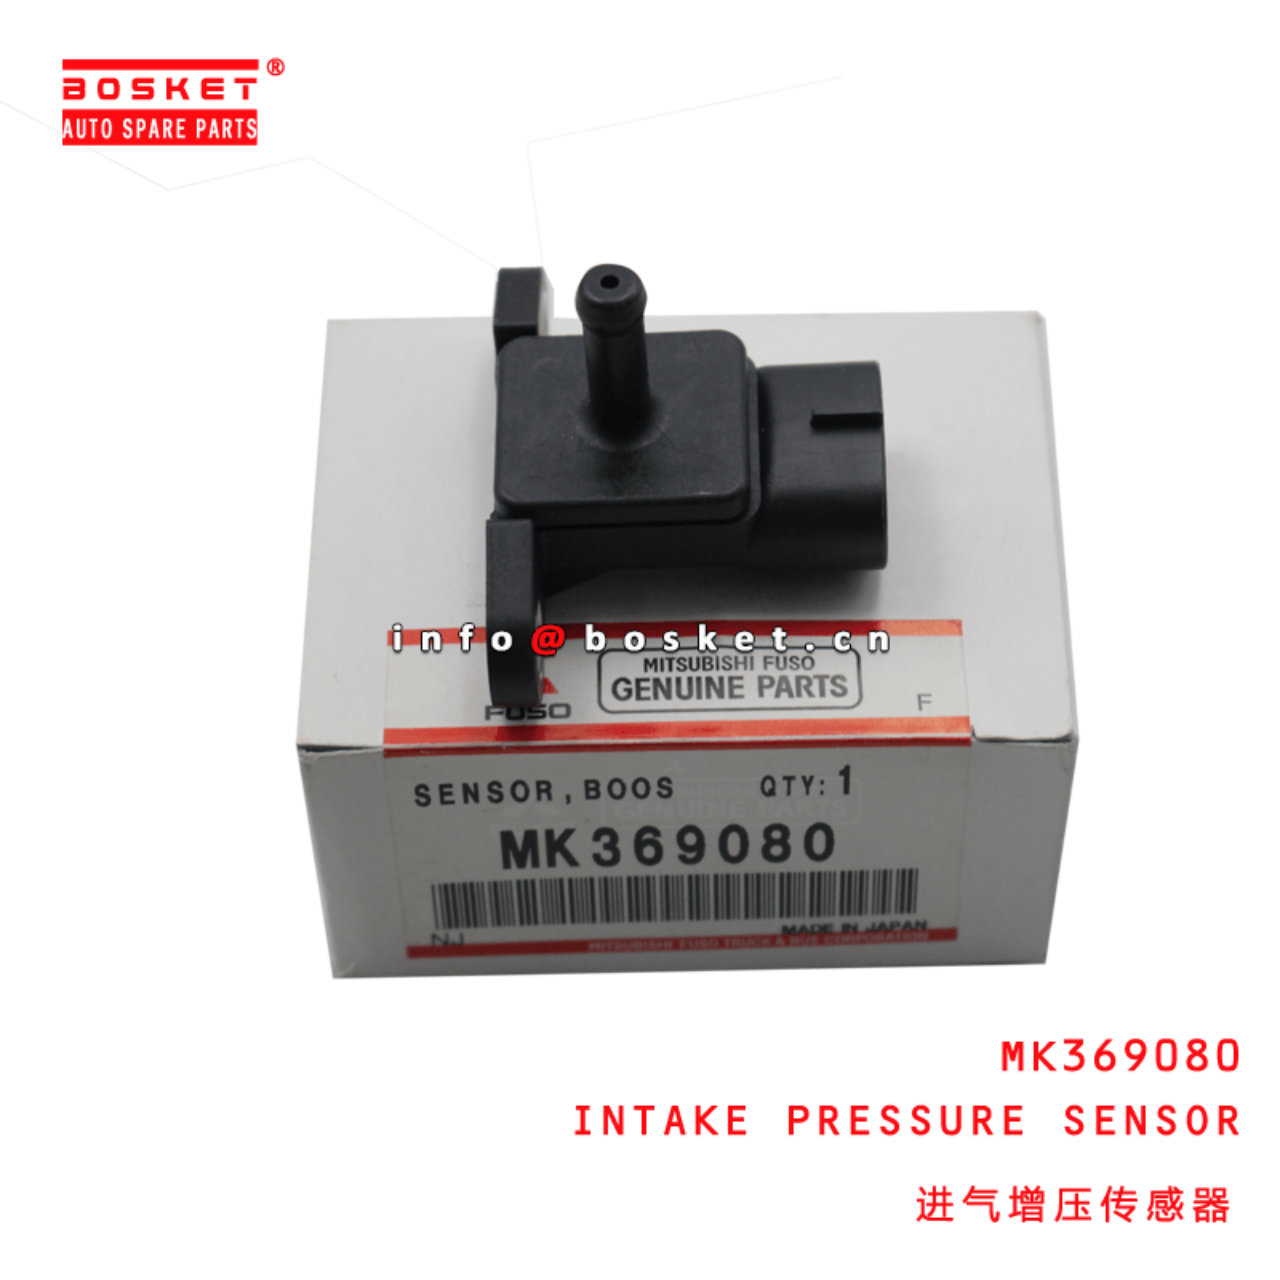 MK369080 Intake Pressure Sensor Suitable For MITSUBISHI FUSO 